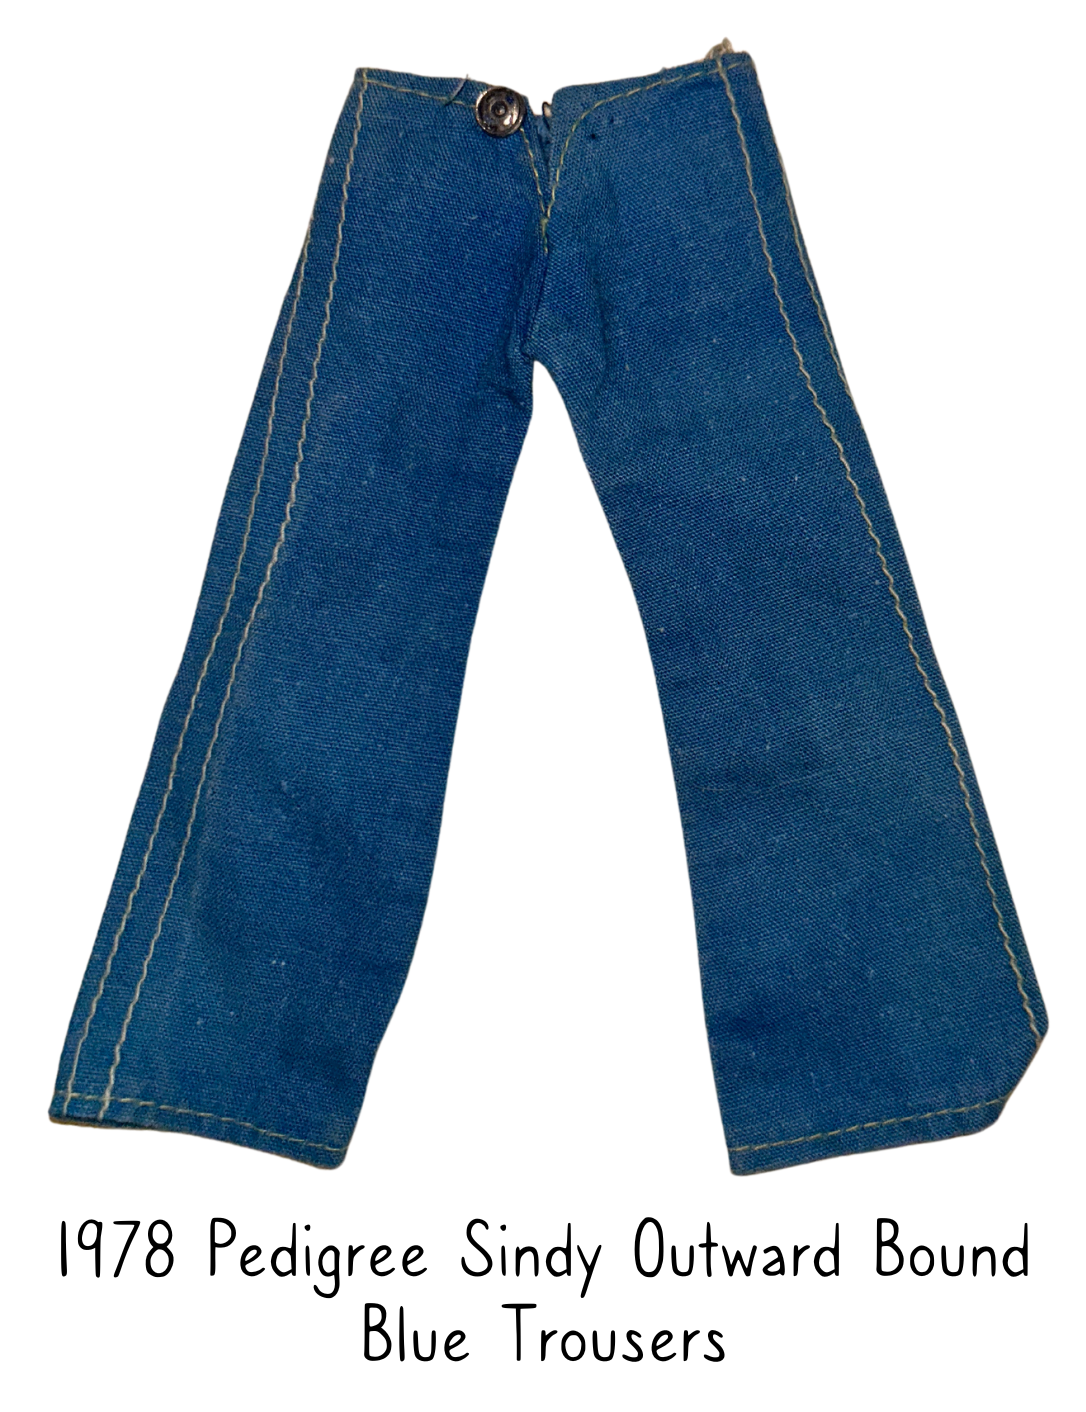 1978 Pedigree Sindy Fashion Doll Outward Bound Blue Trousers